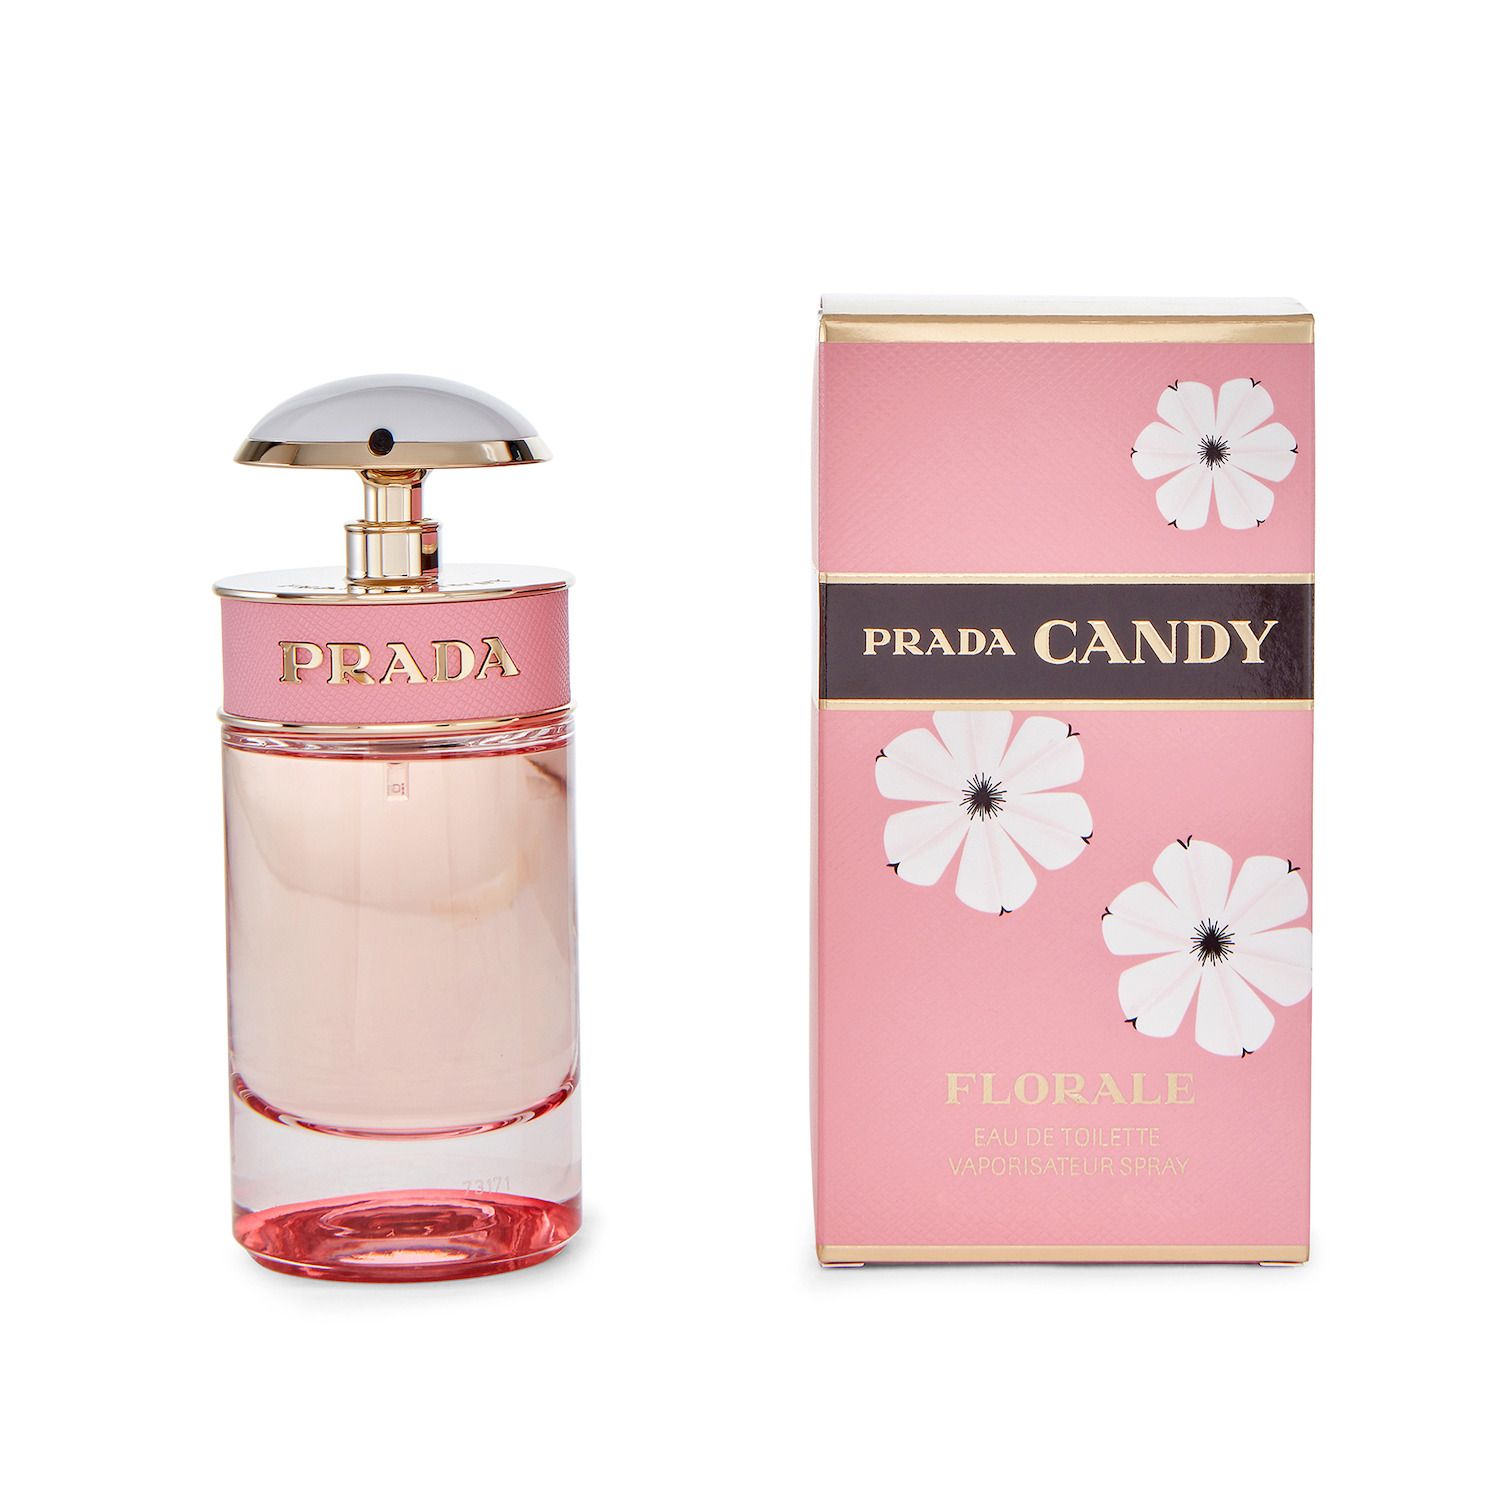 Prada Candy Florale Women's Perfume 